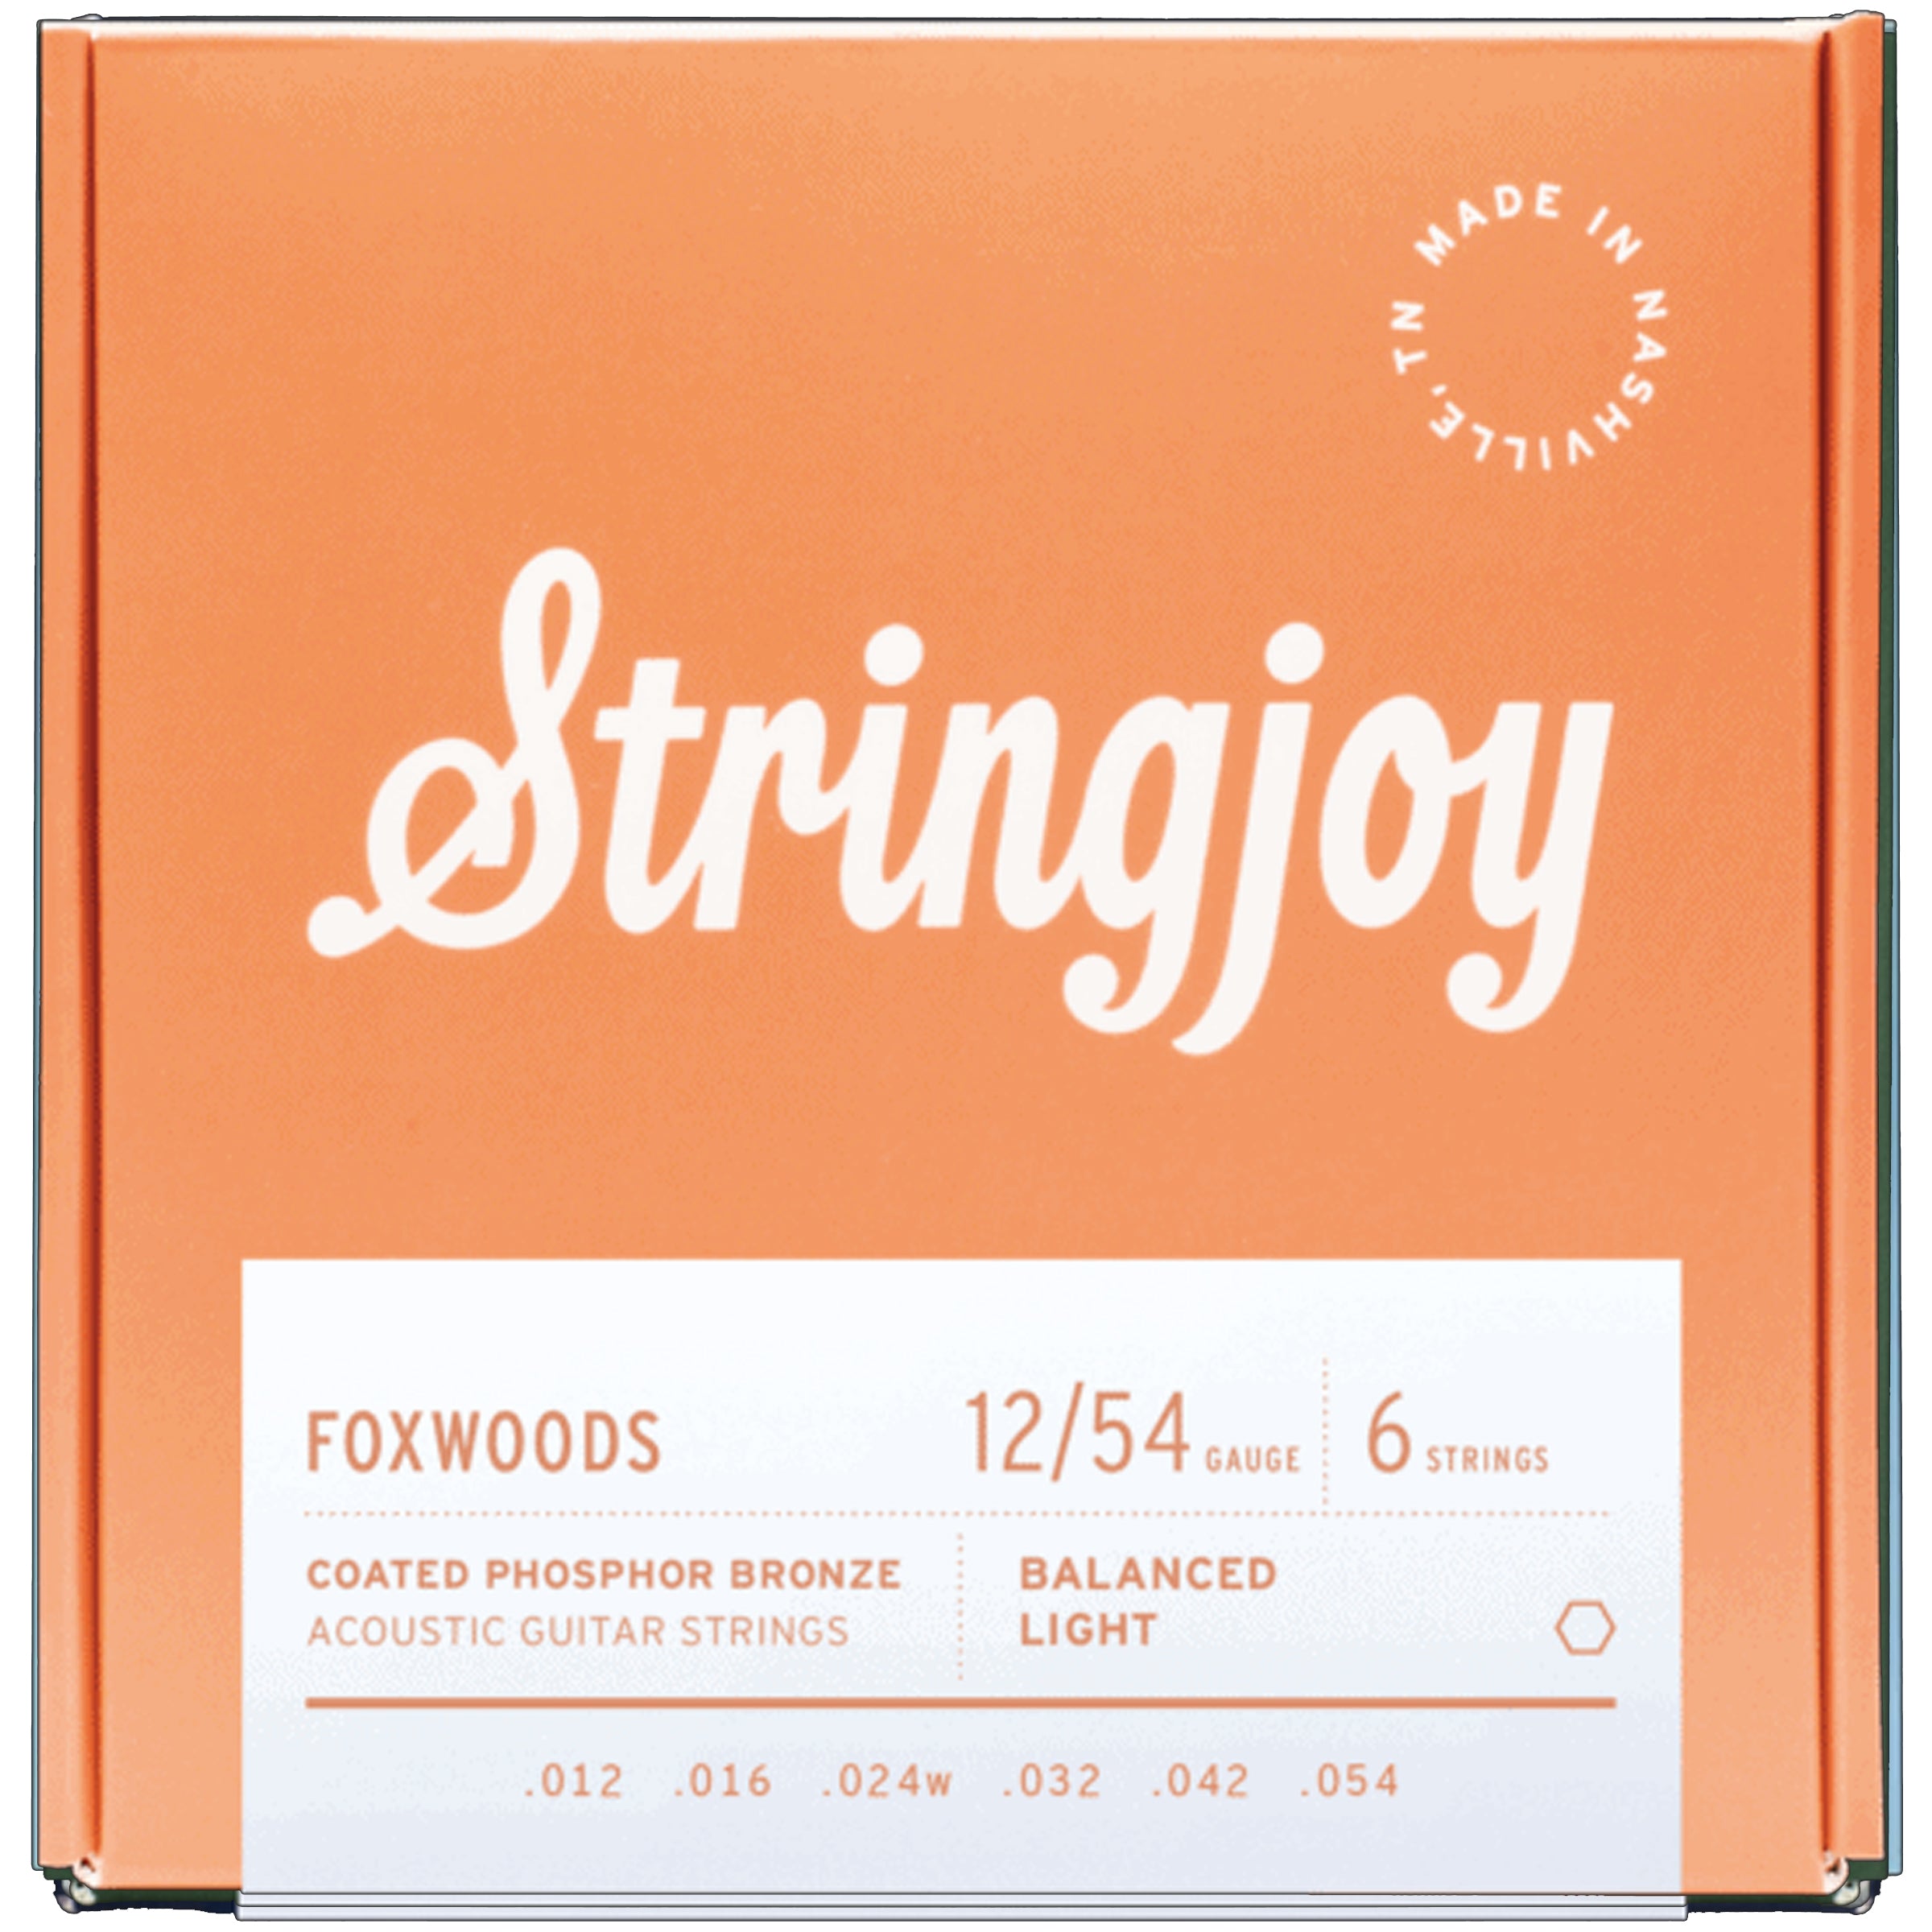 Stringjoy Strings | Small Box Music - Free Shipping!